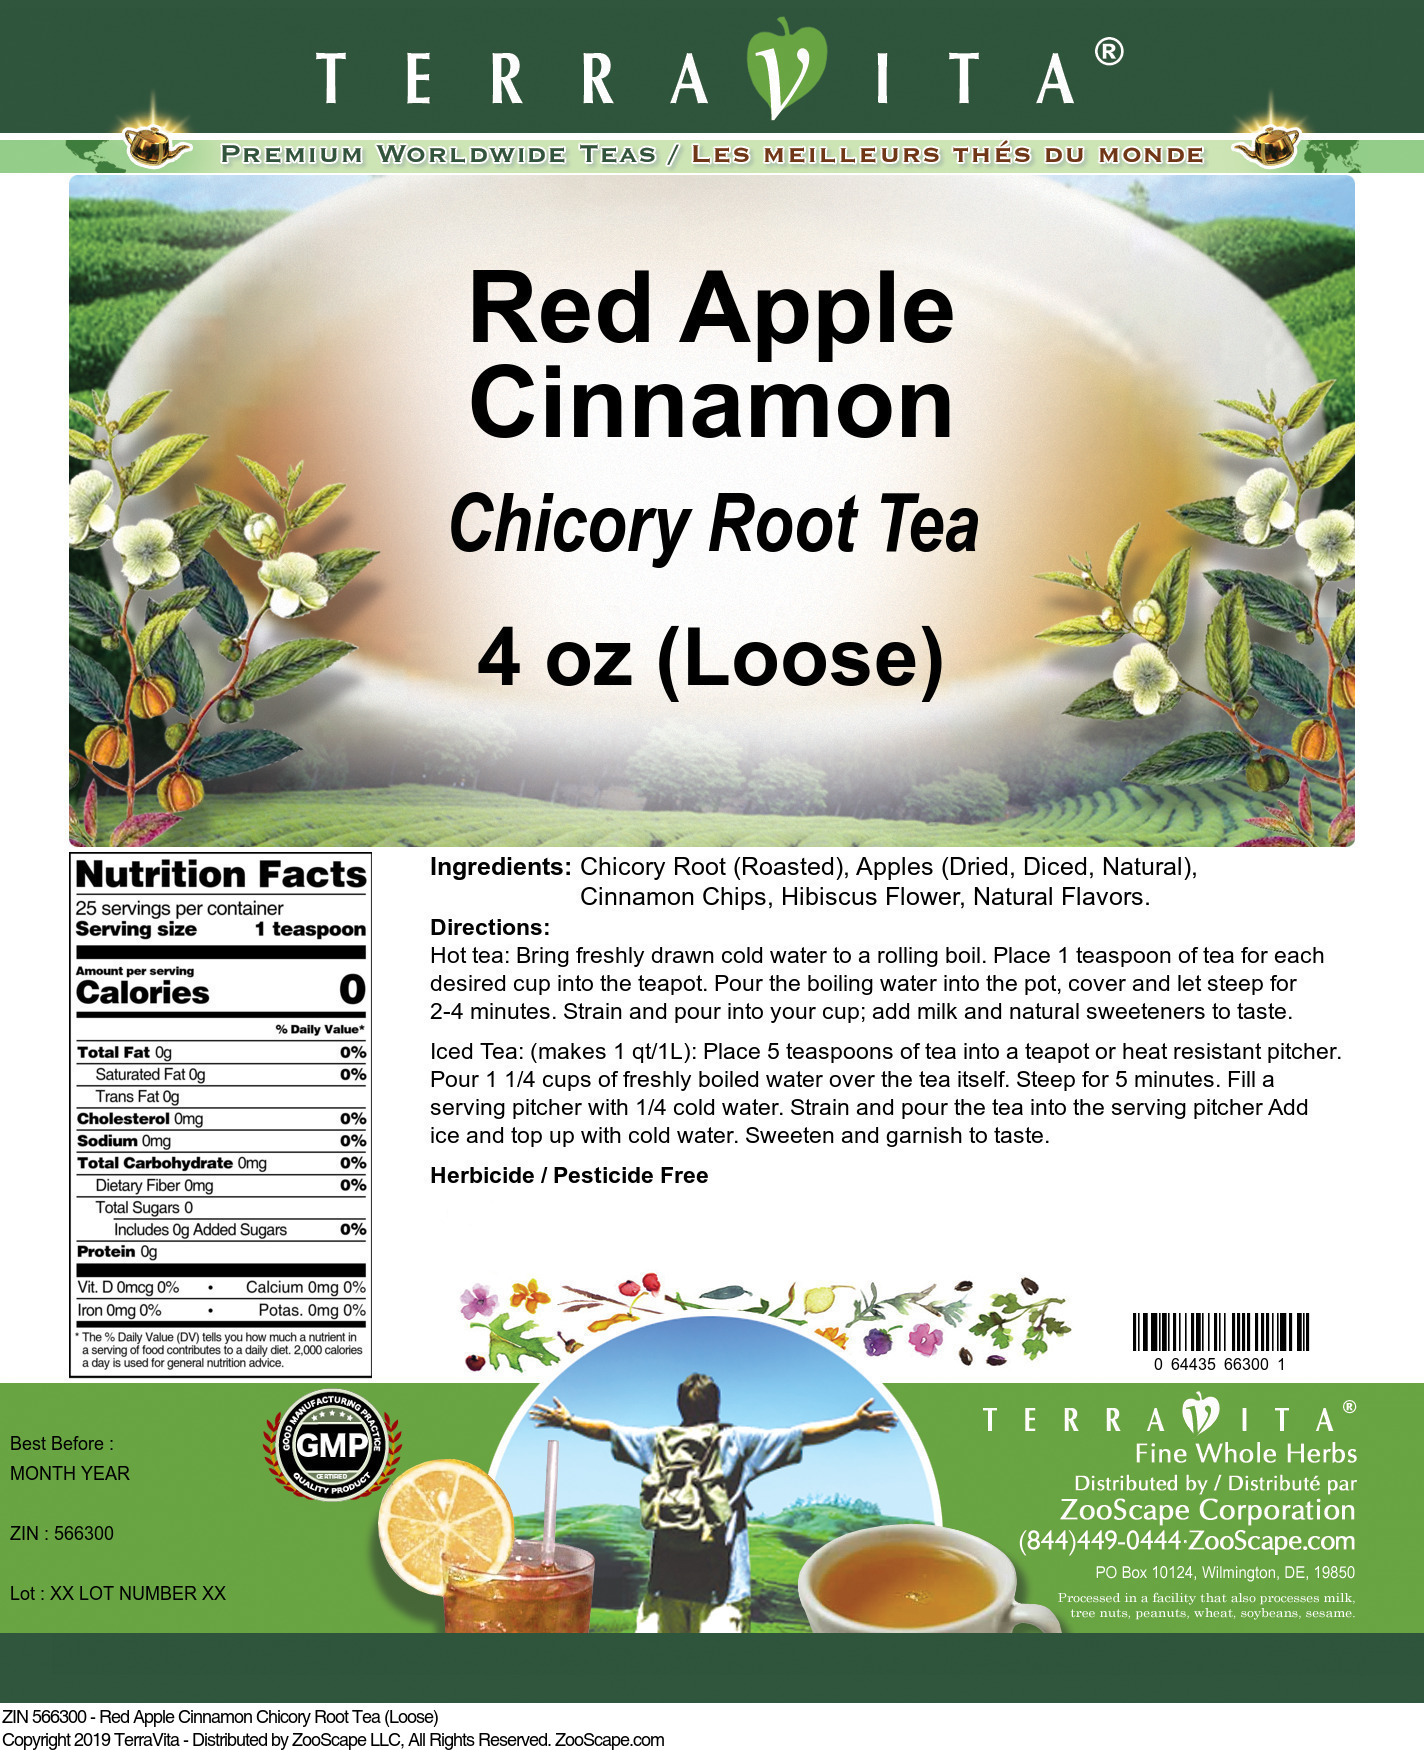 Red Apple Cinnamon Chicory Root Tea (Loose) - Label